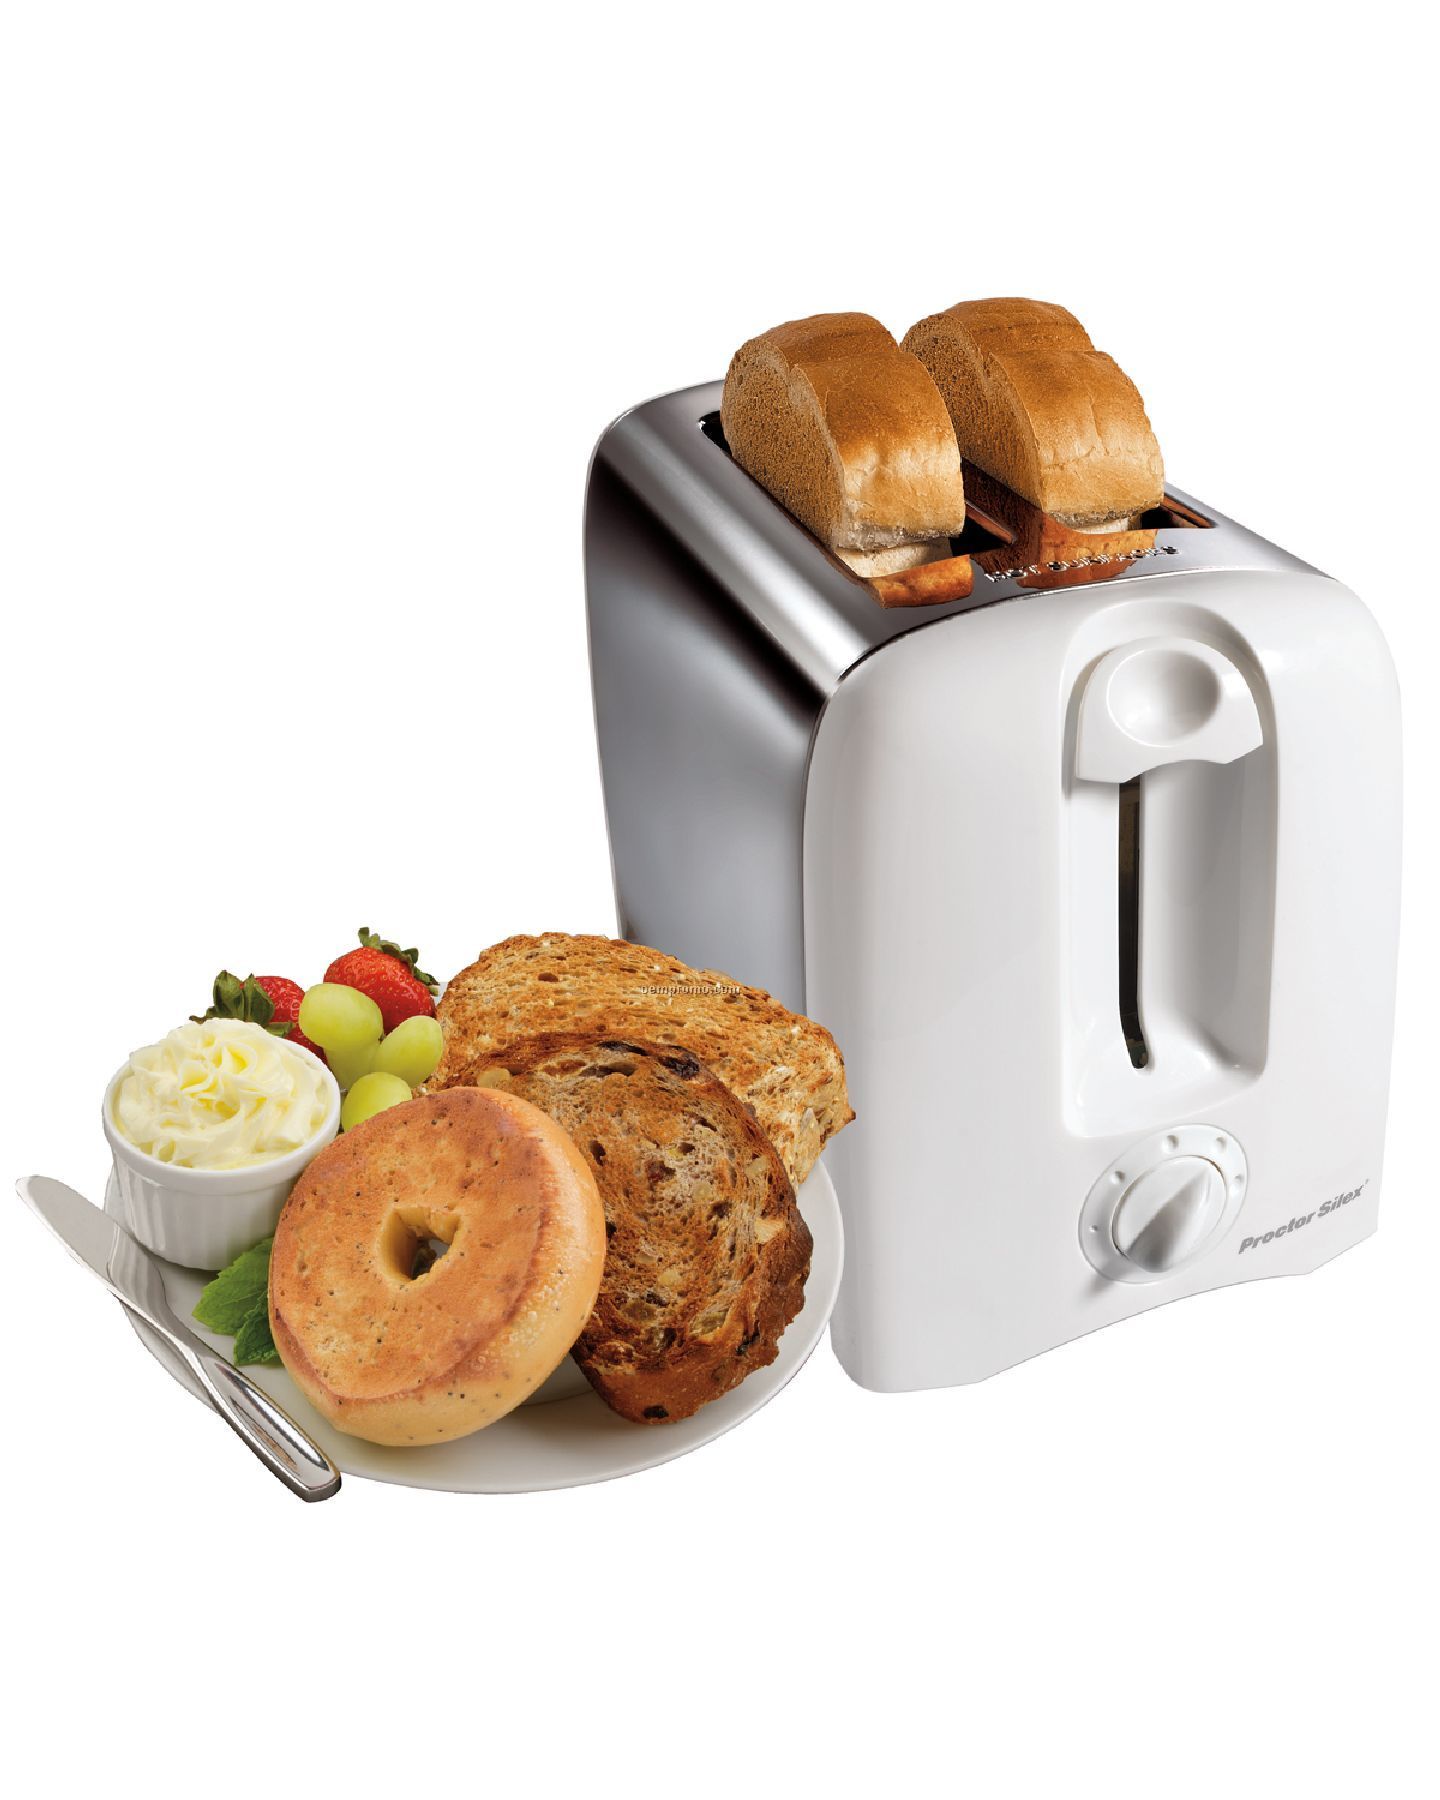 Proctor Silex - Toasters - 2-slice Toaster